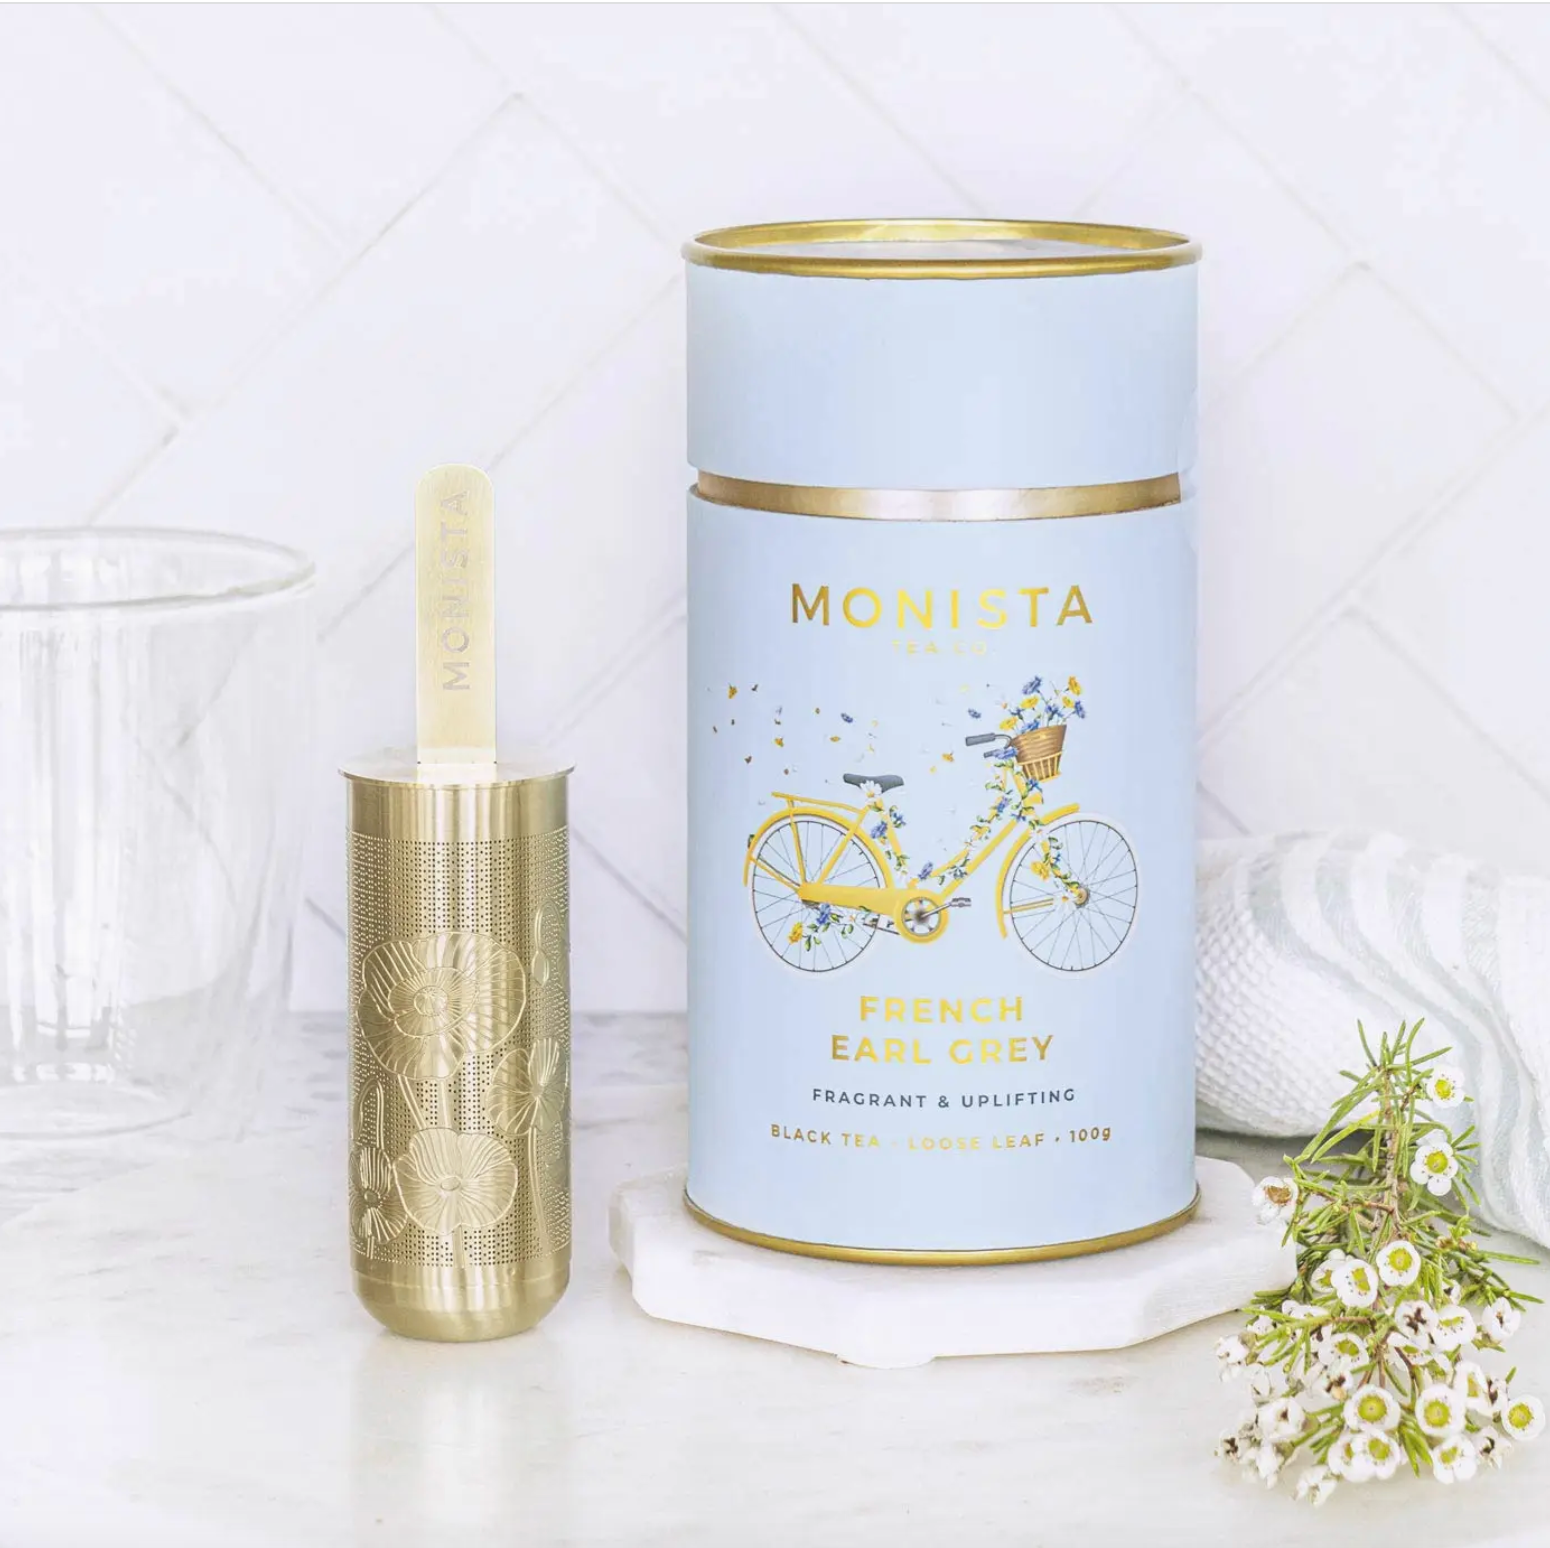 Gold Tea Infuser by Monista Tea Co.